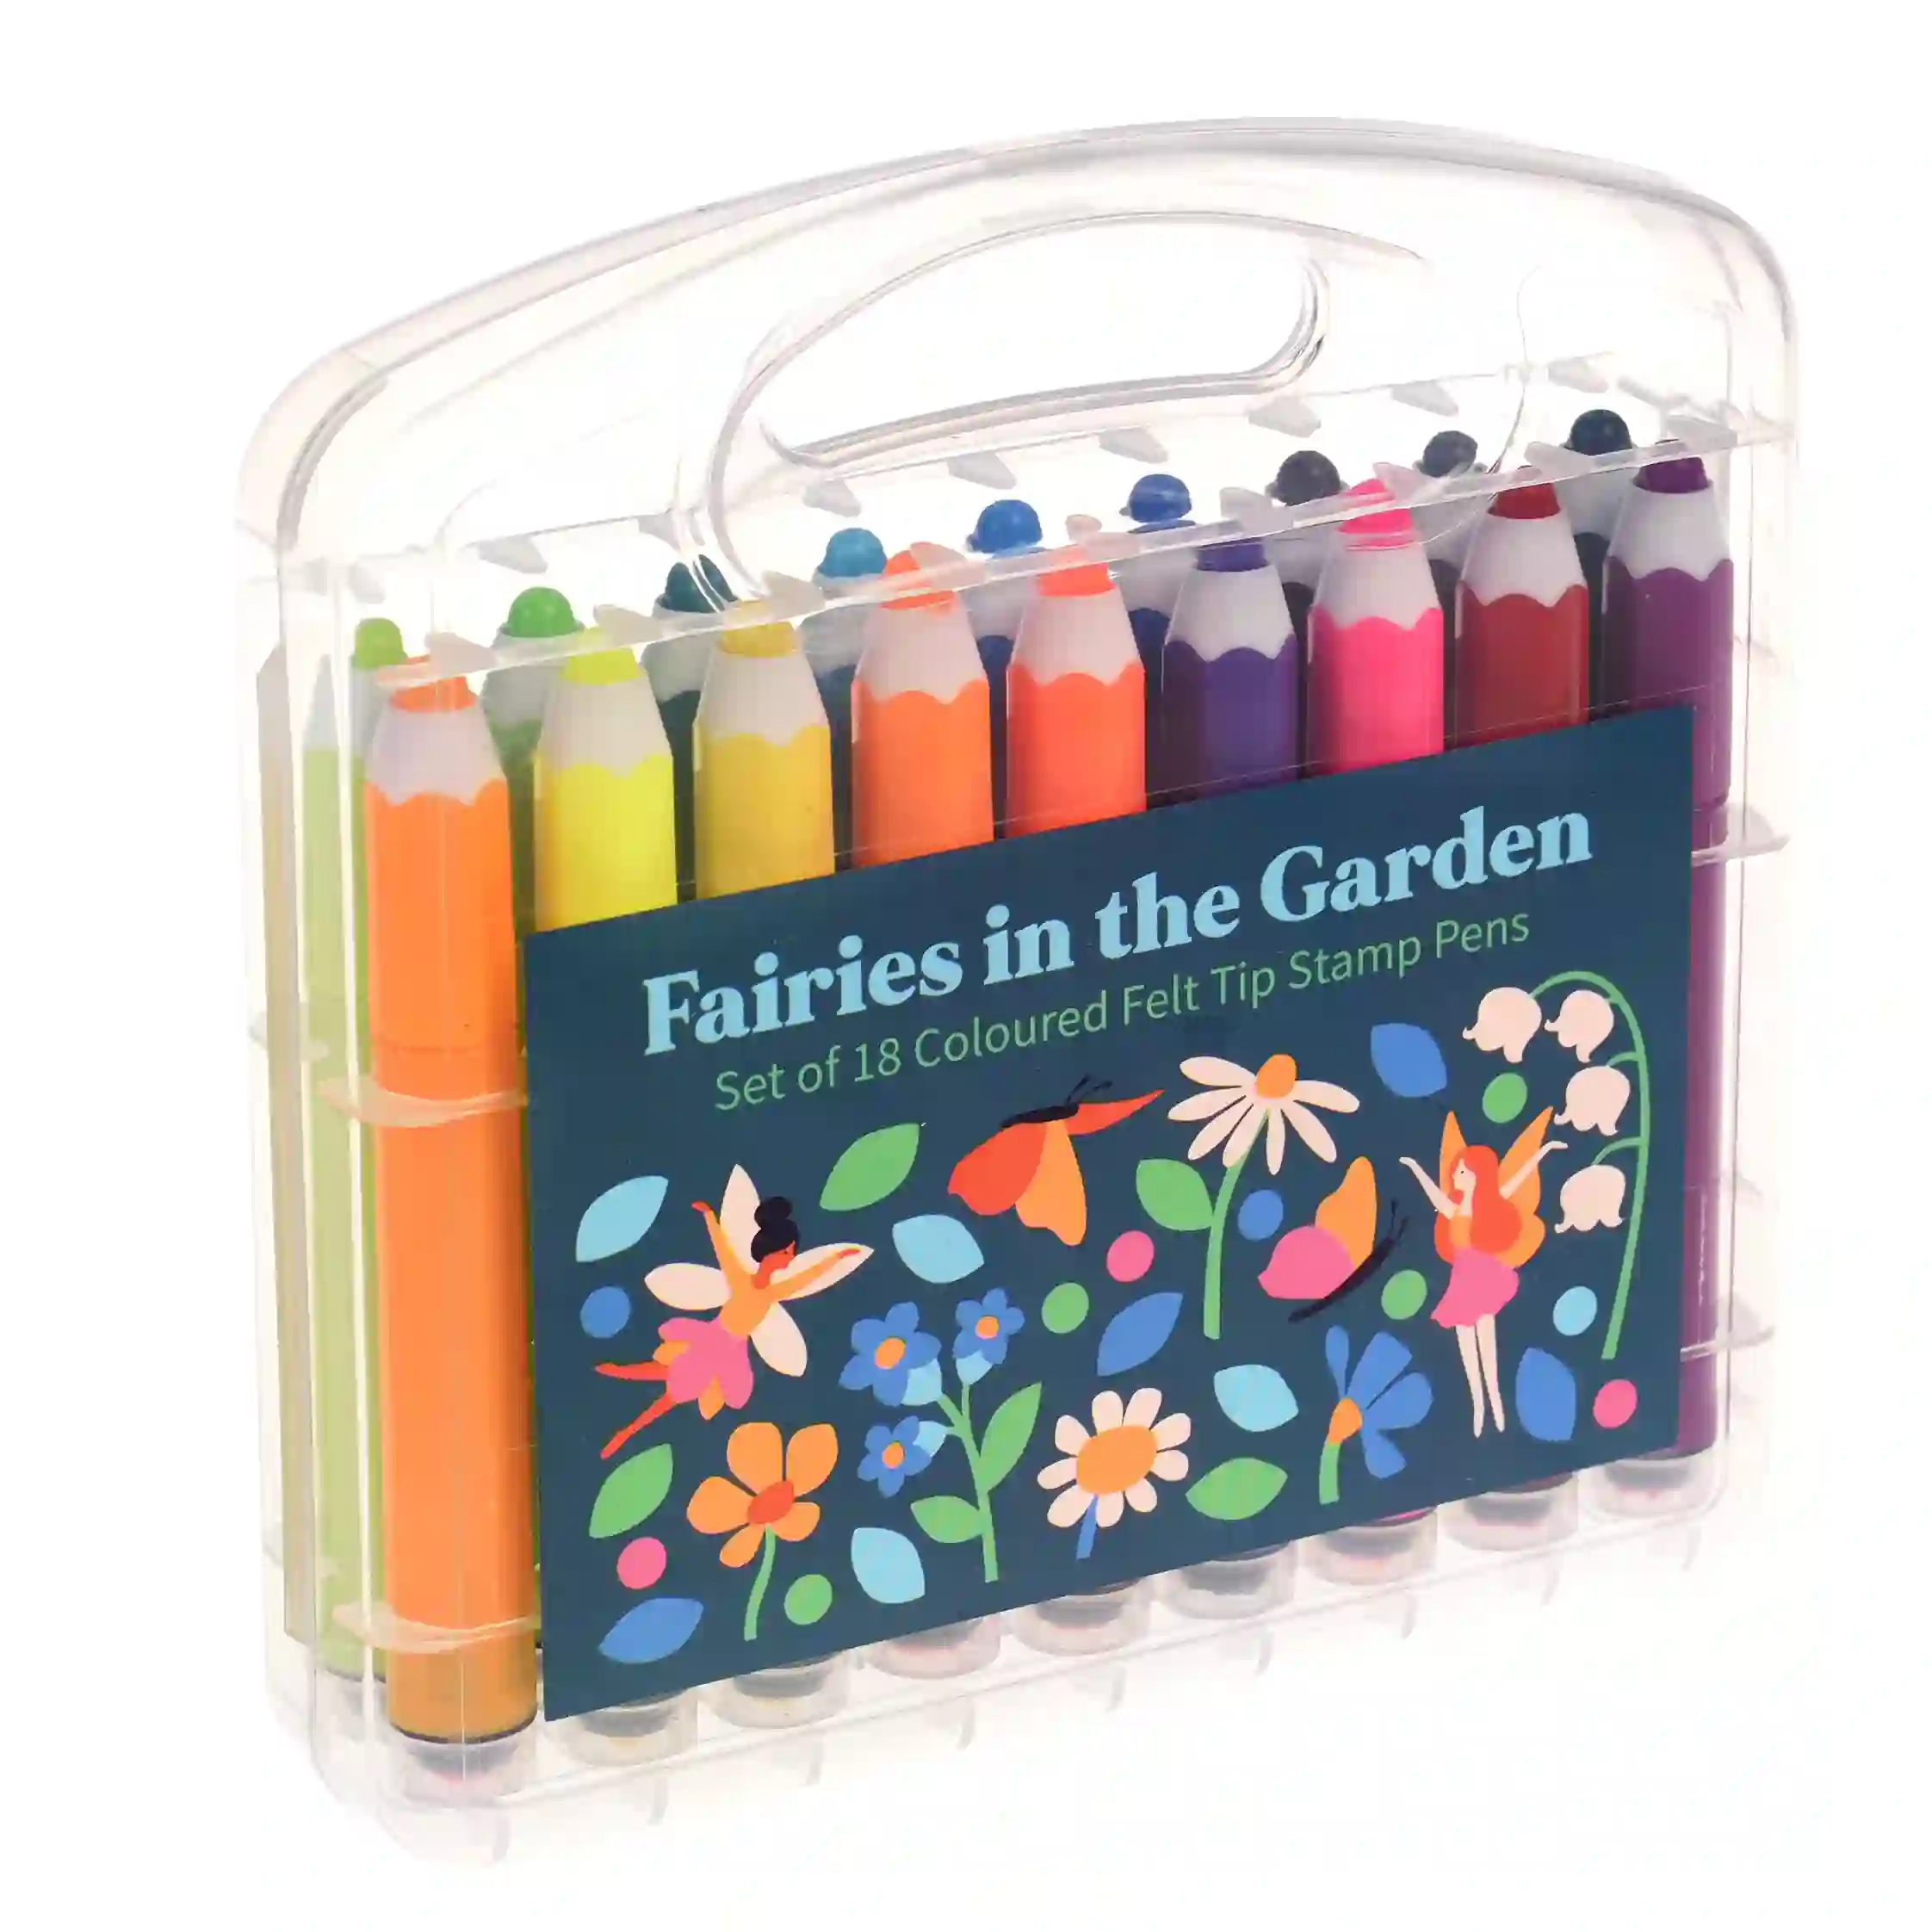 felt tip stamp pens - fairies in the garden